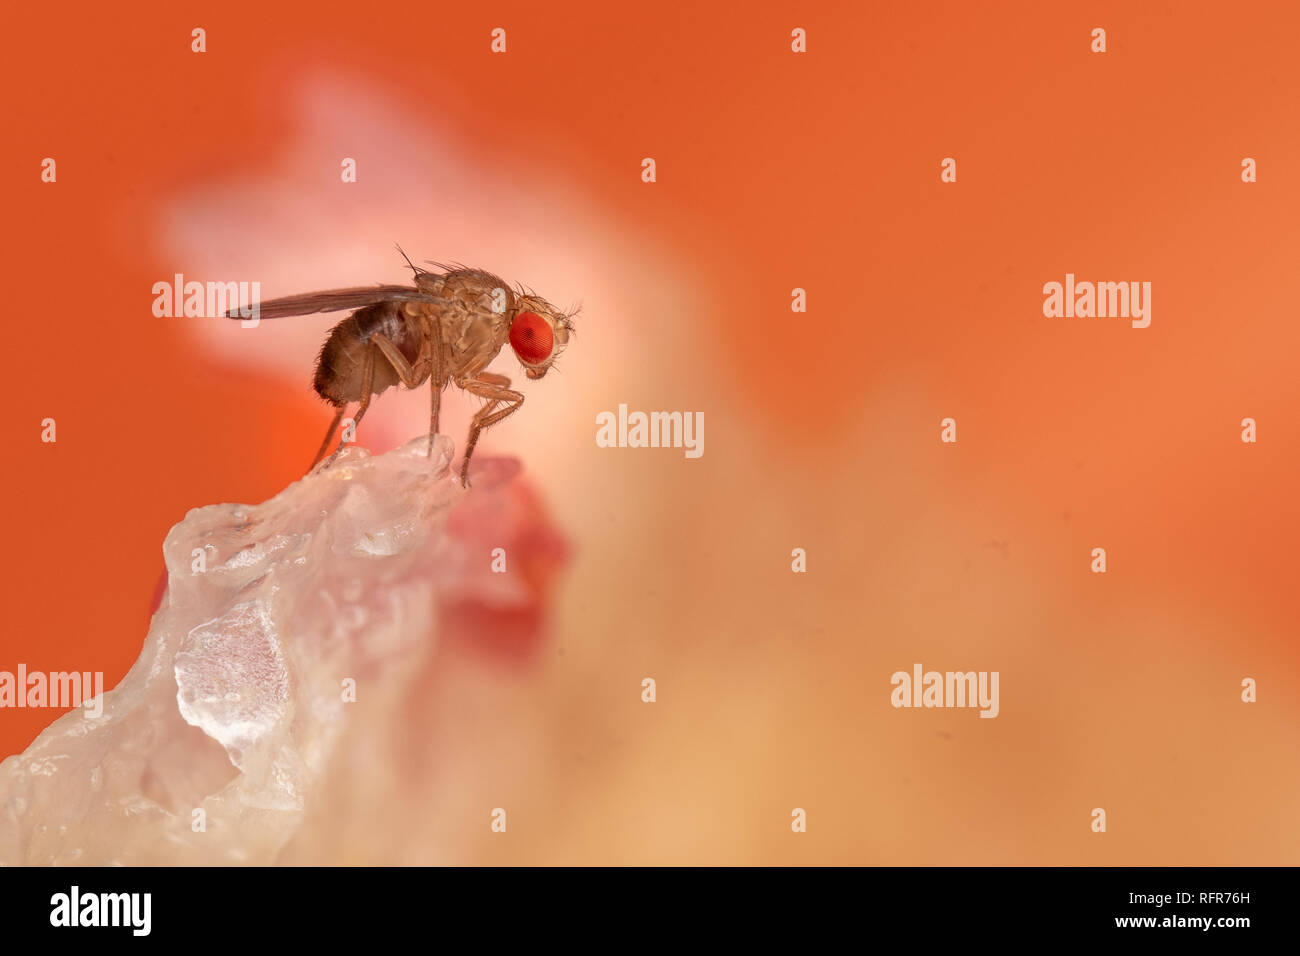 Aceto di frutta mosche, Drosophila, una cucina in comune di pest alimentazione su scarti di alimenti Foto Stock